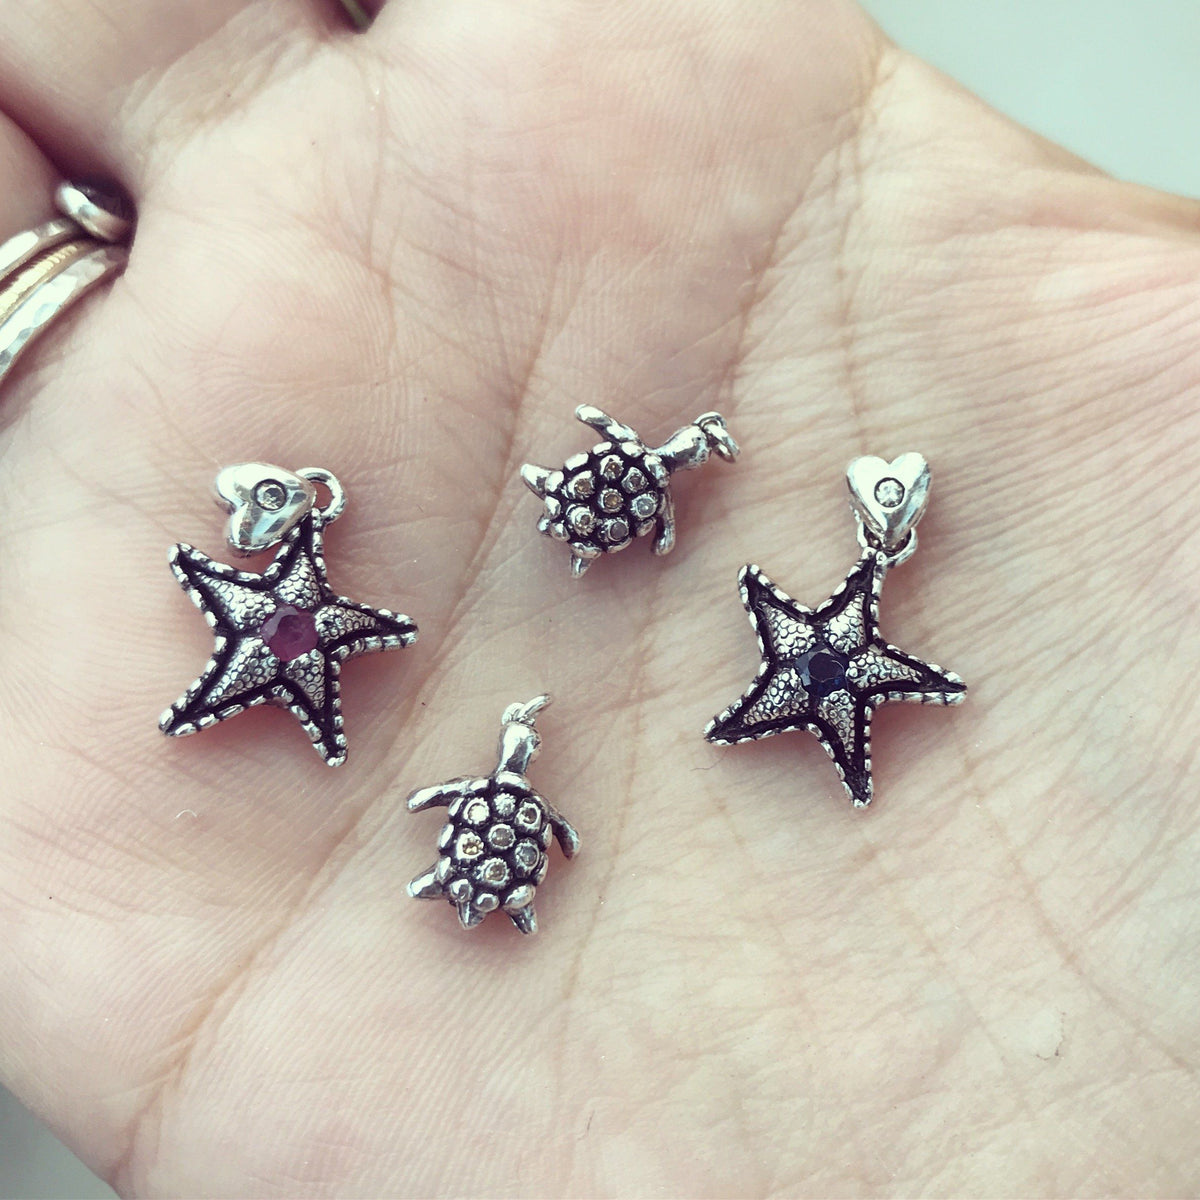 Lana necklace - sterling silver starfish necklace necklace Amanda K Lockrow 